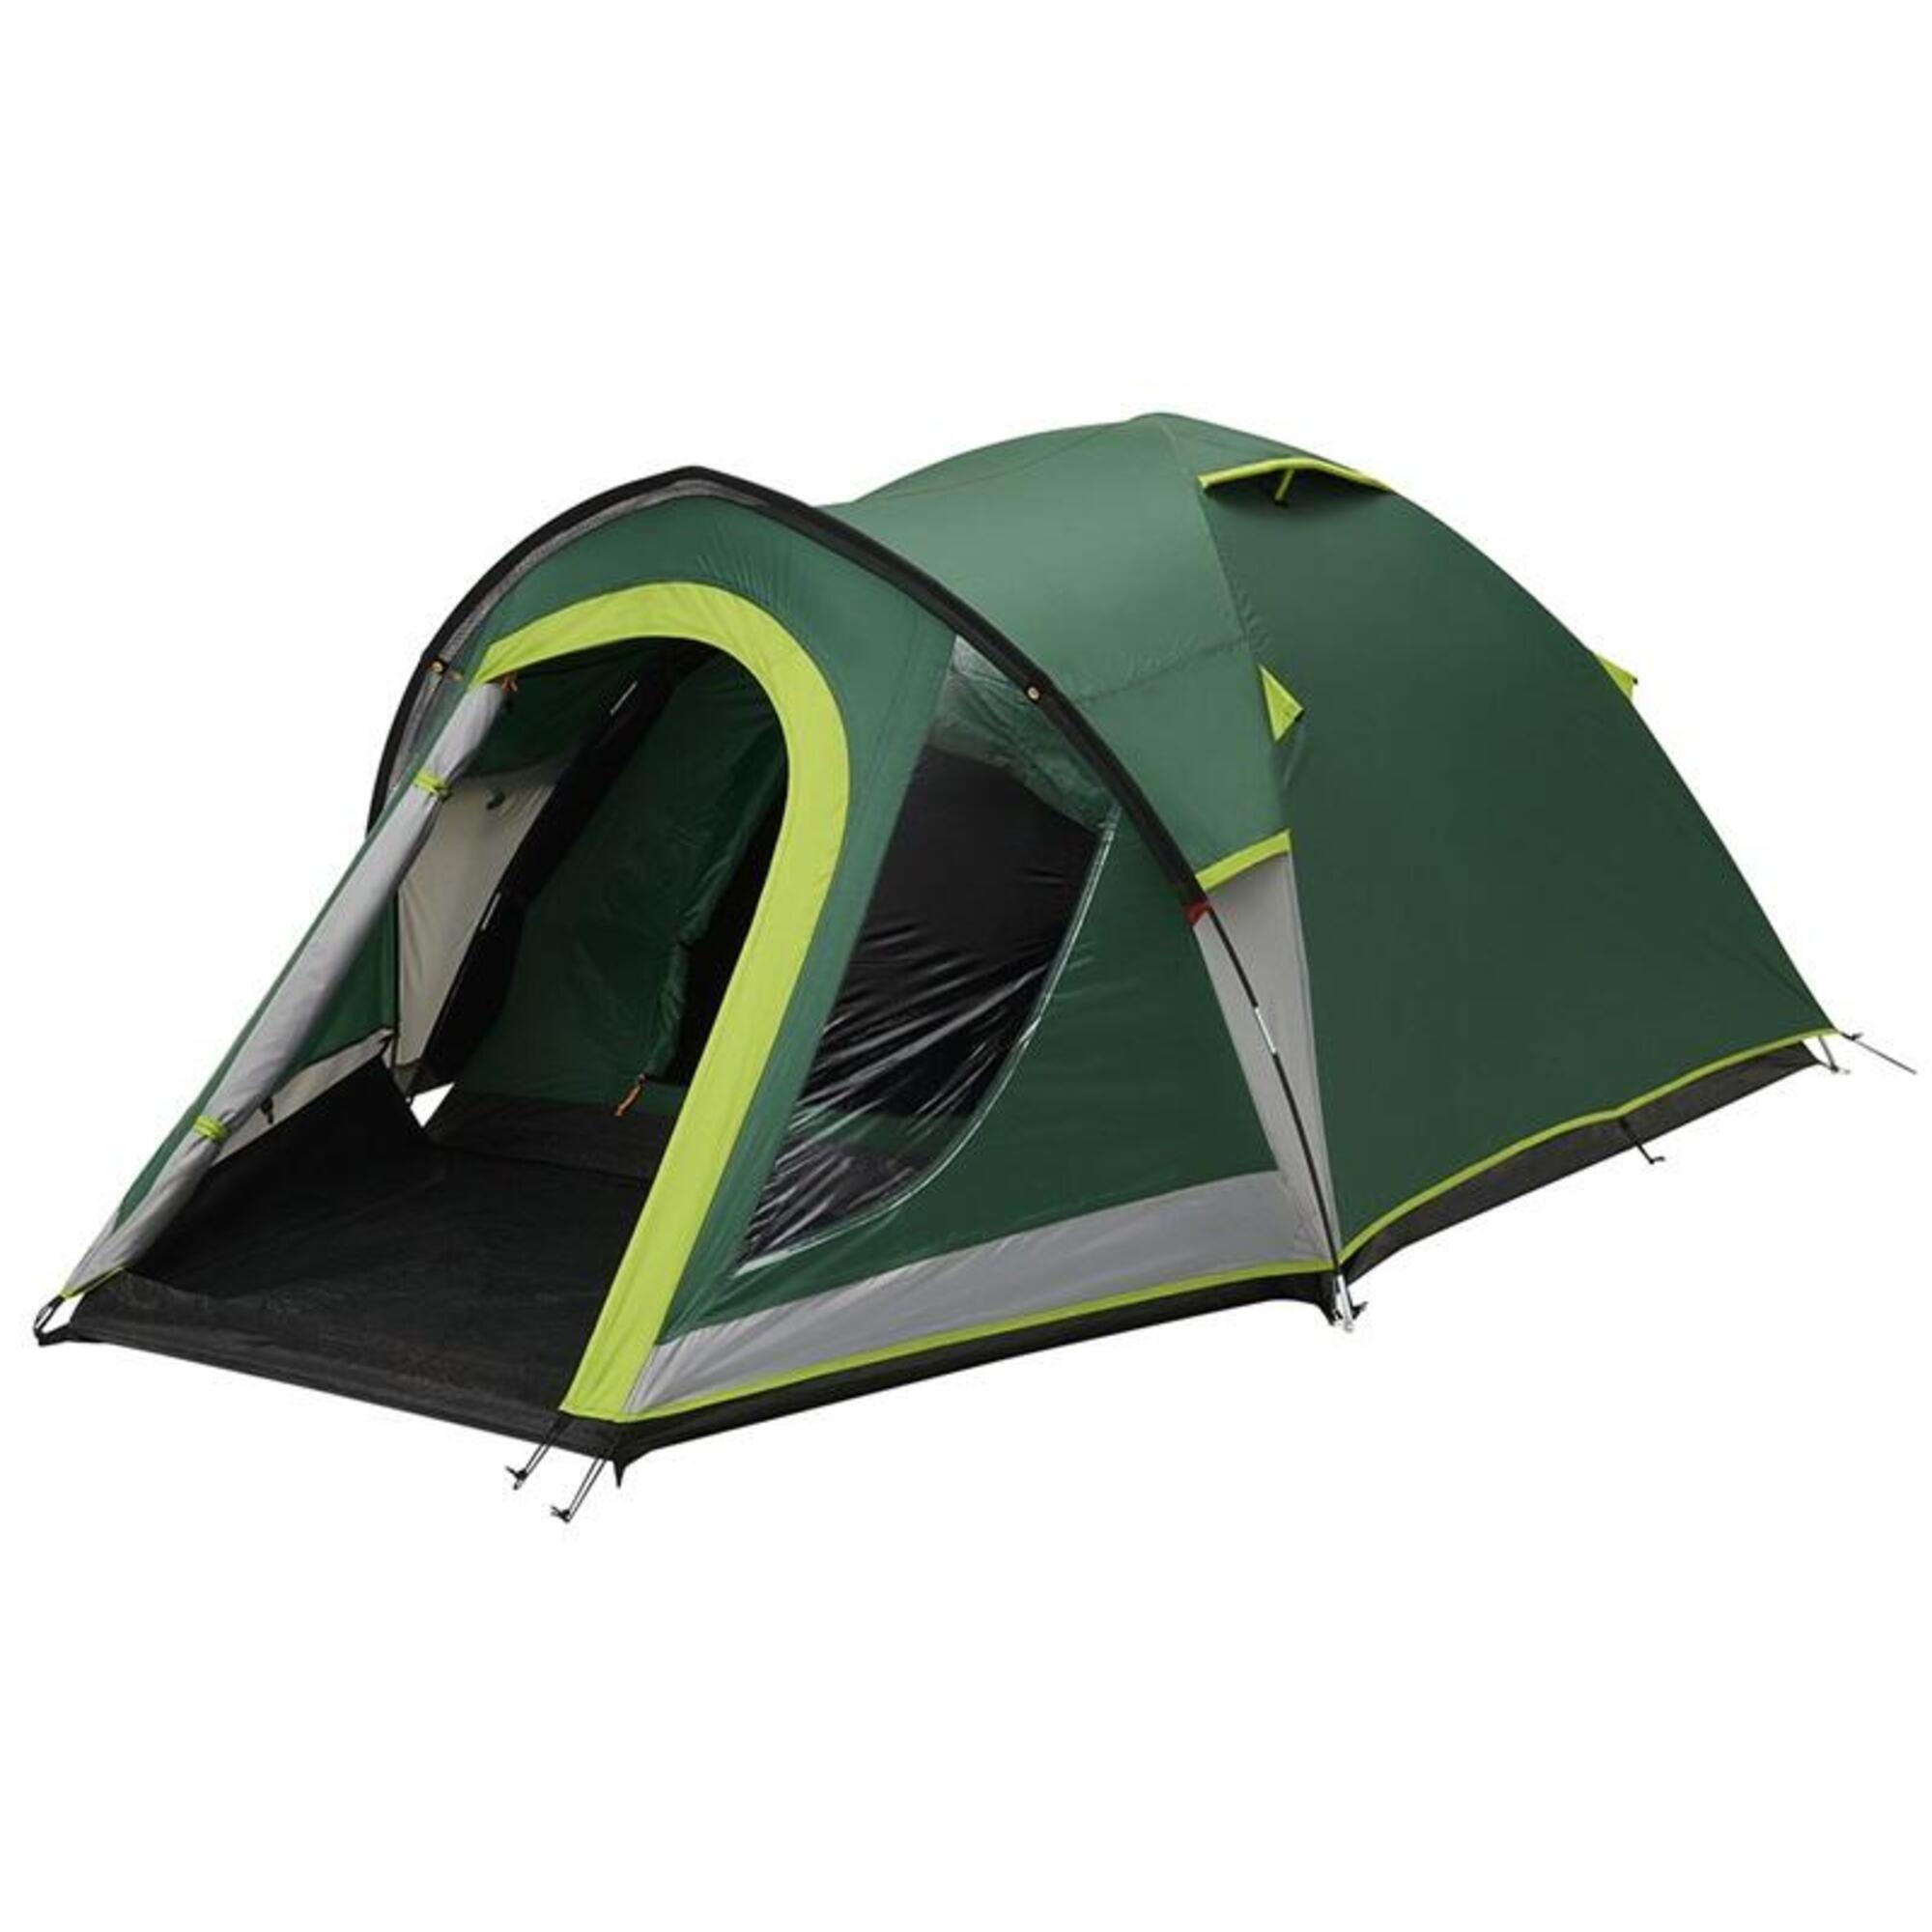 COLEMAN Coleman BlackOut Bedroom Kobuk Valley 4 Person Camping Tent Green